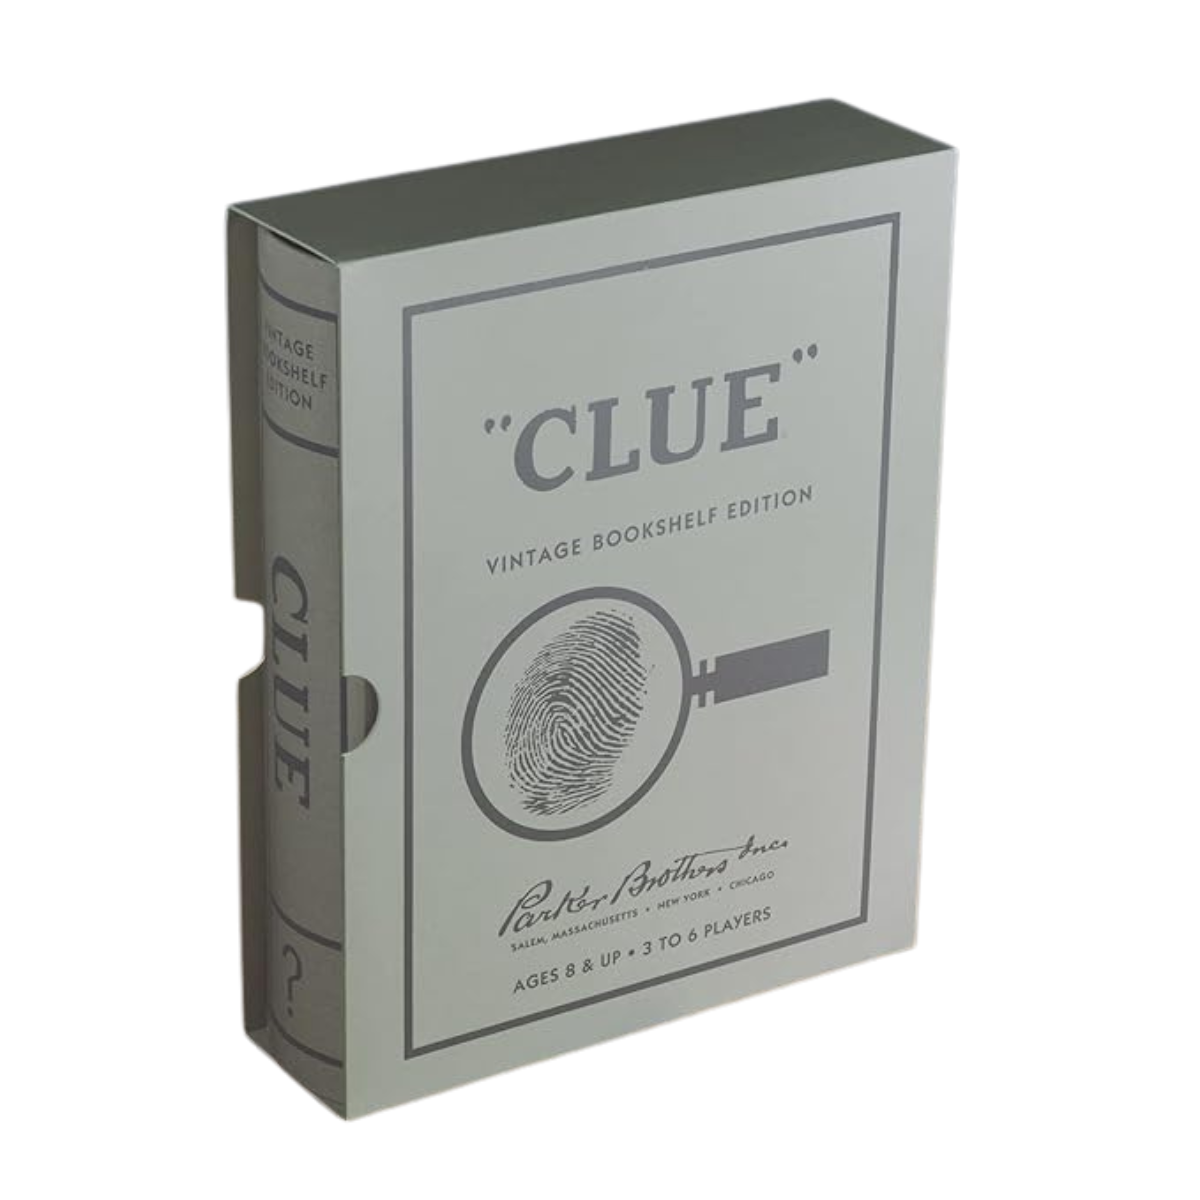 Vintage Bookshelf Edition Game - Clue